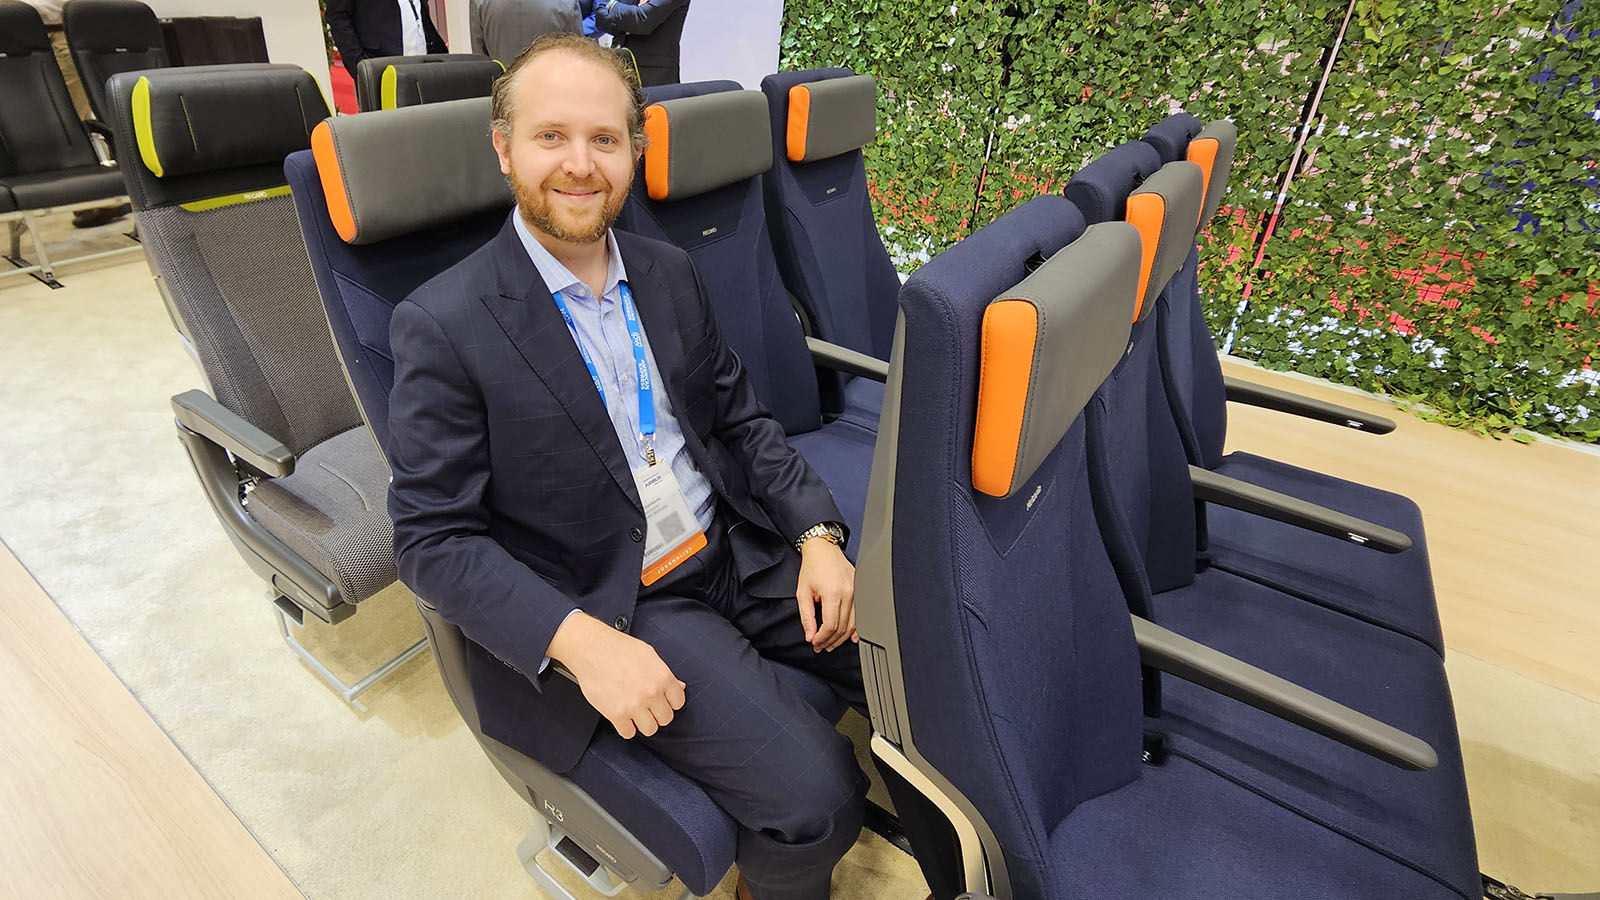 Sampling Qantas' Project Sunrise Economy seat